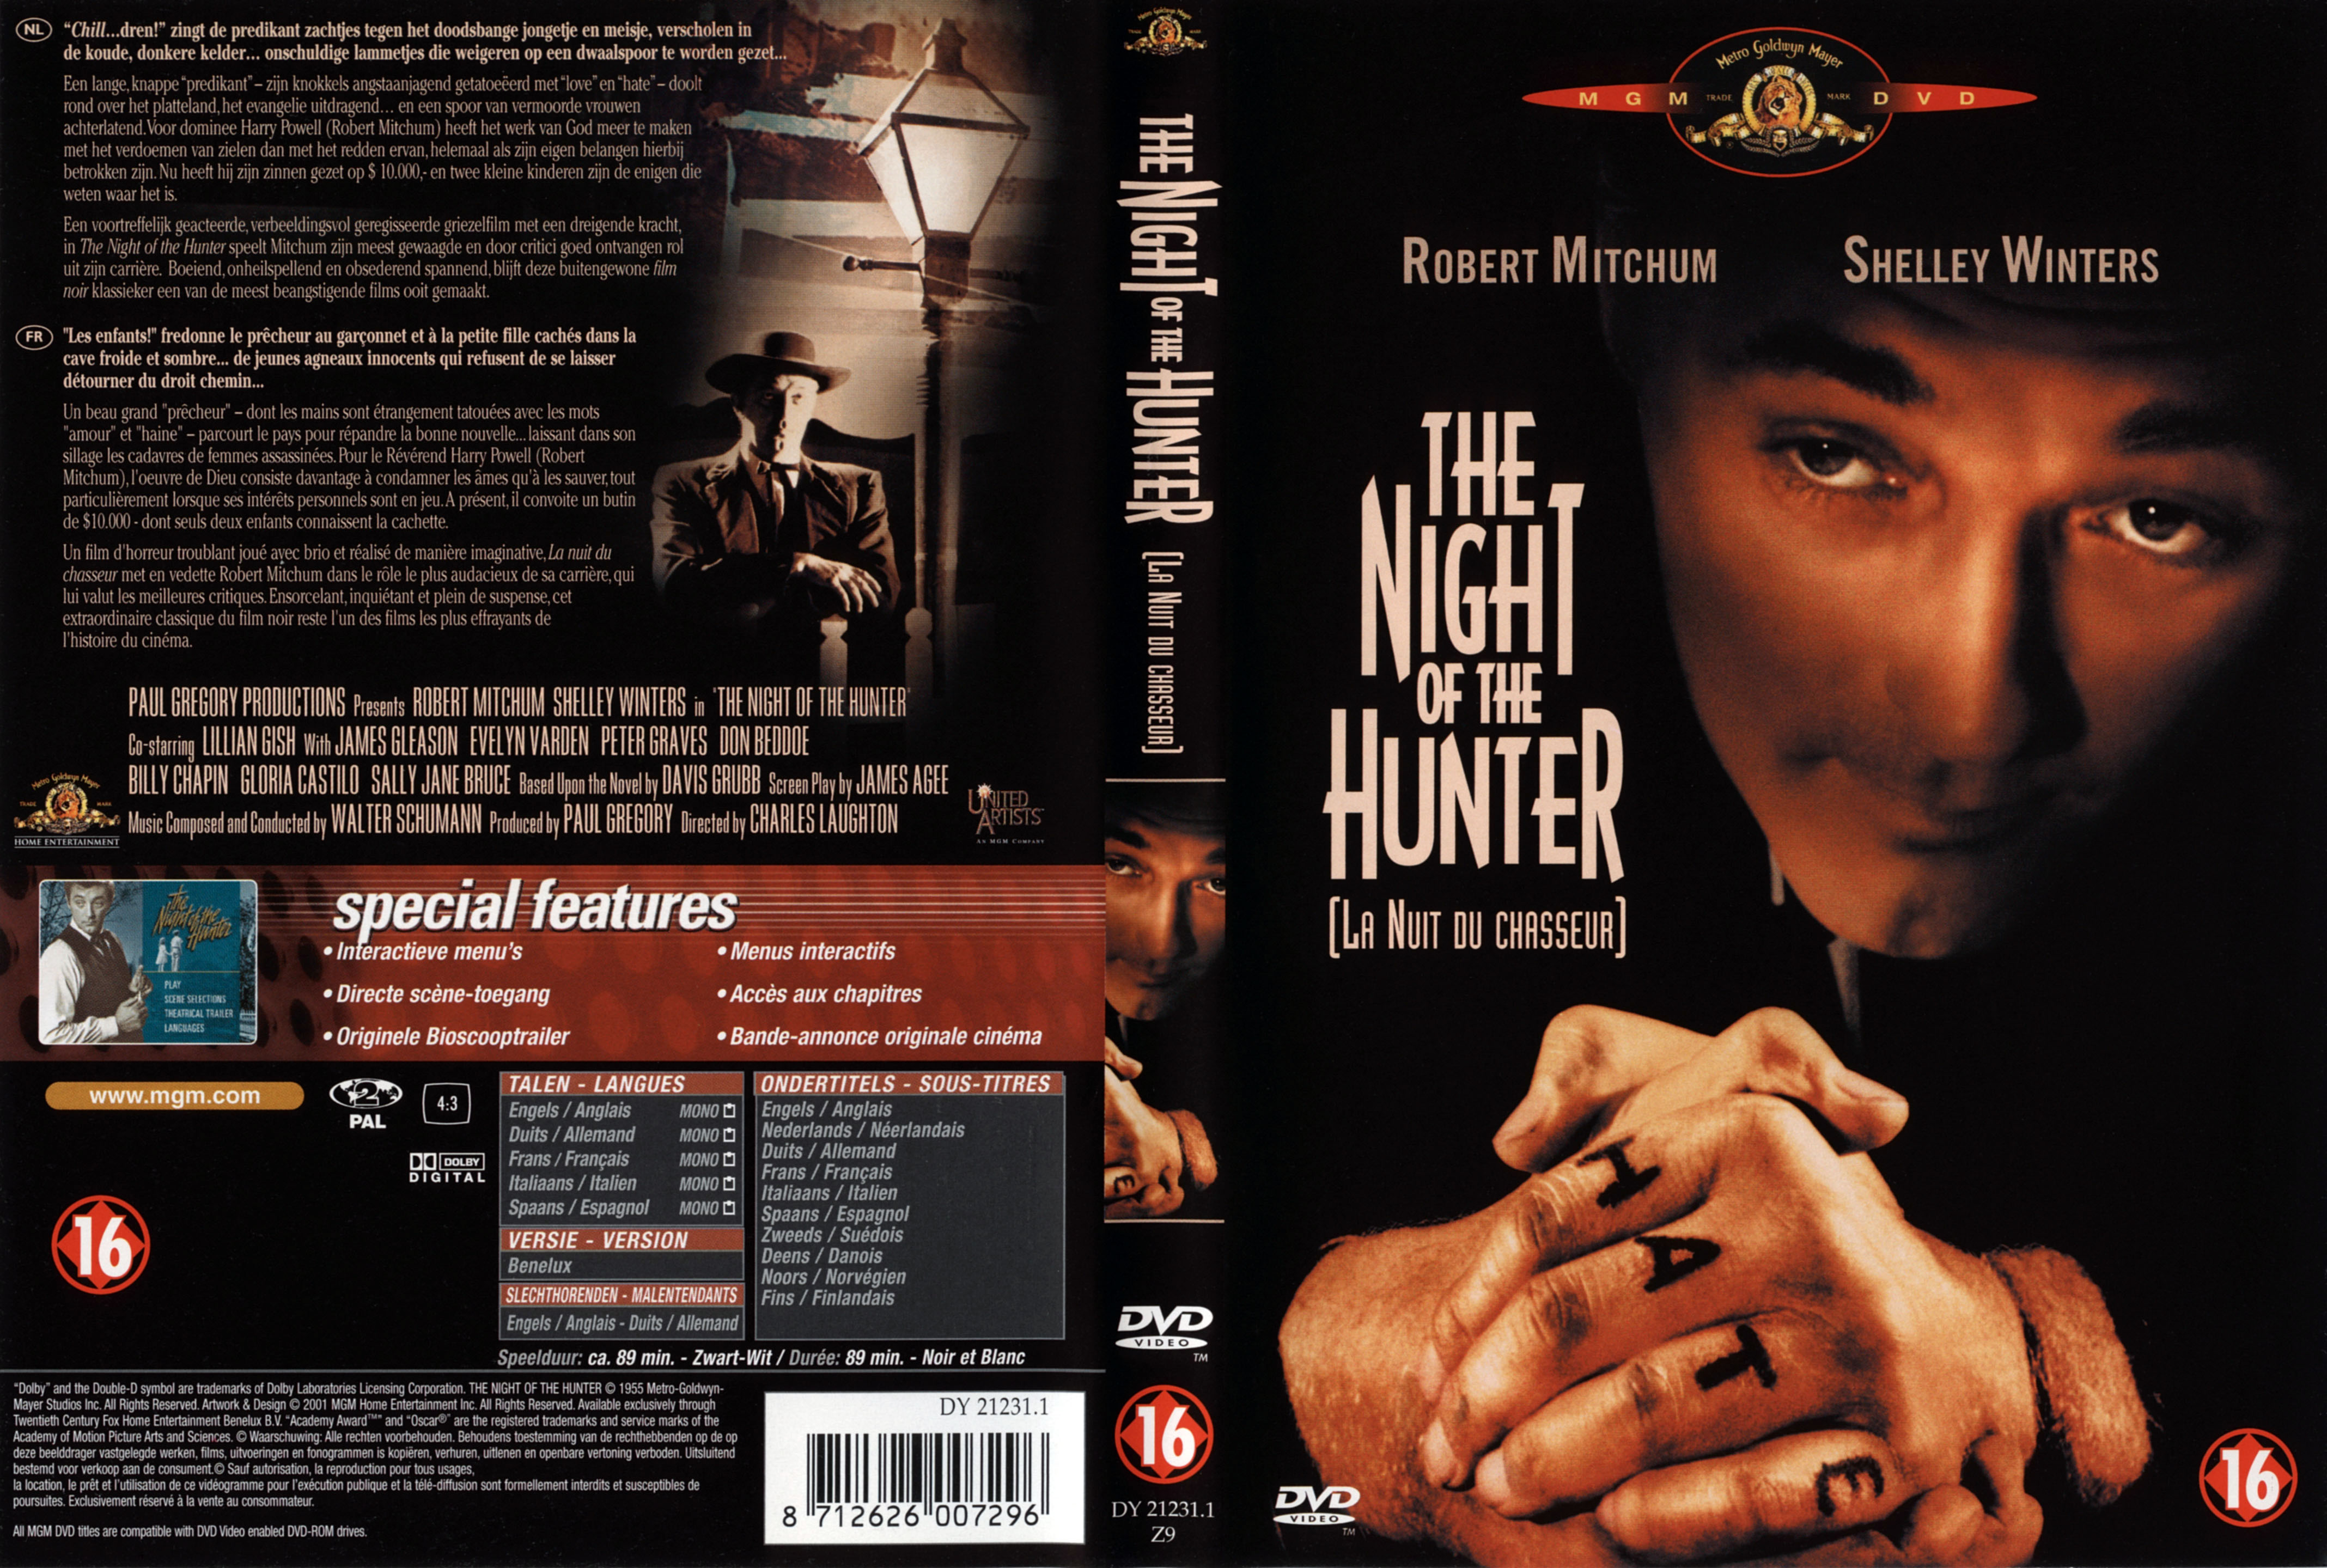 Jaquette DVD La nuit du chasseur - The night of the hunter